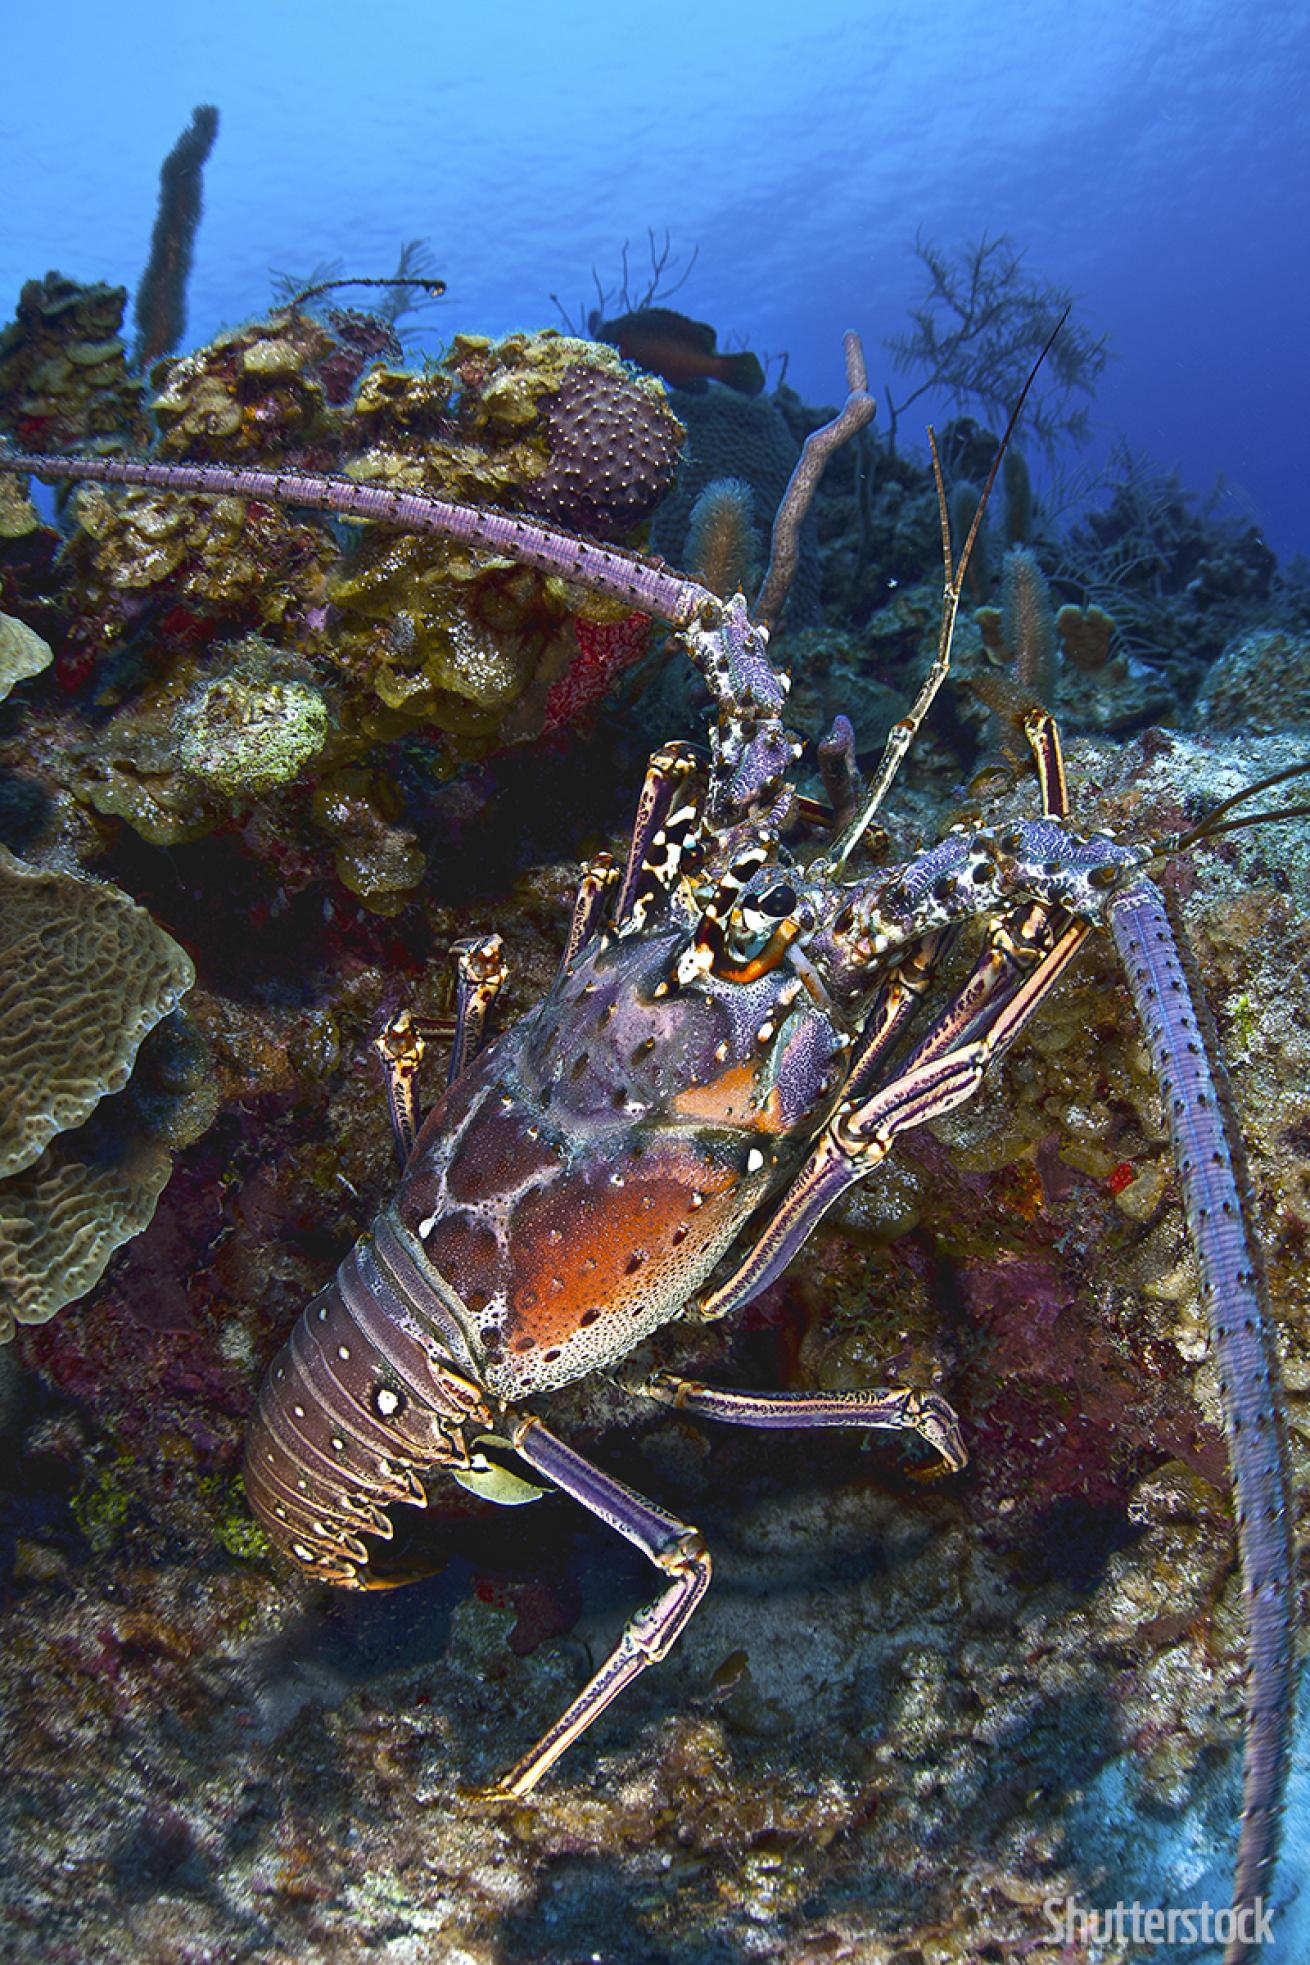 spiny lobster scuba diving hunting season